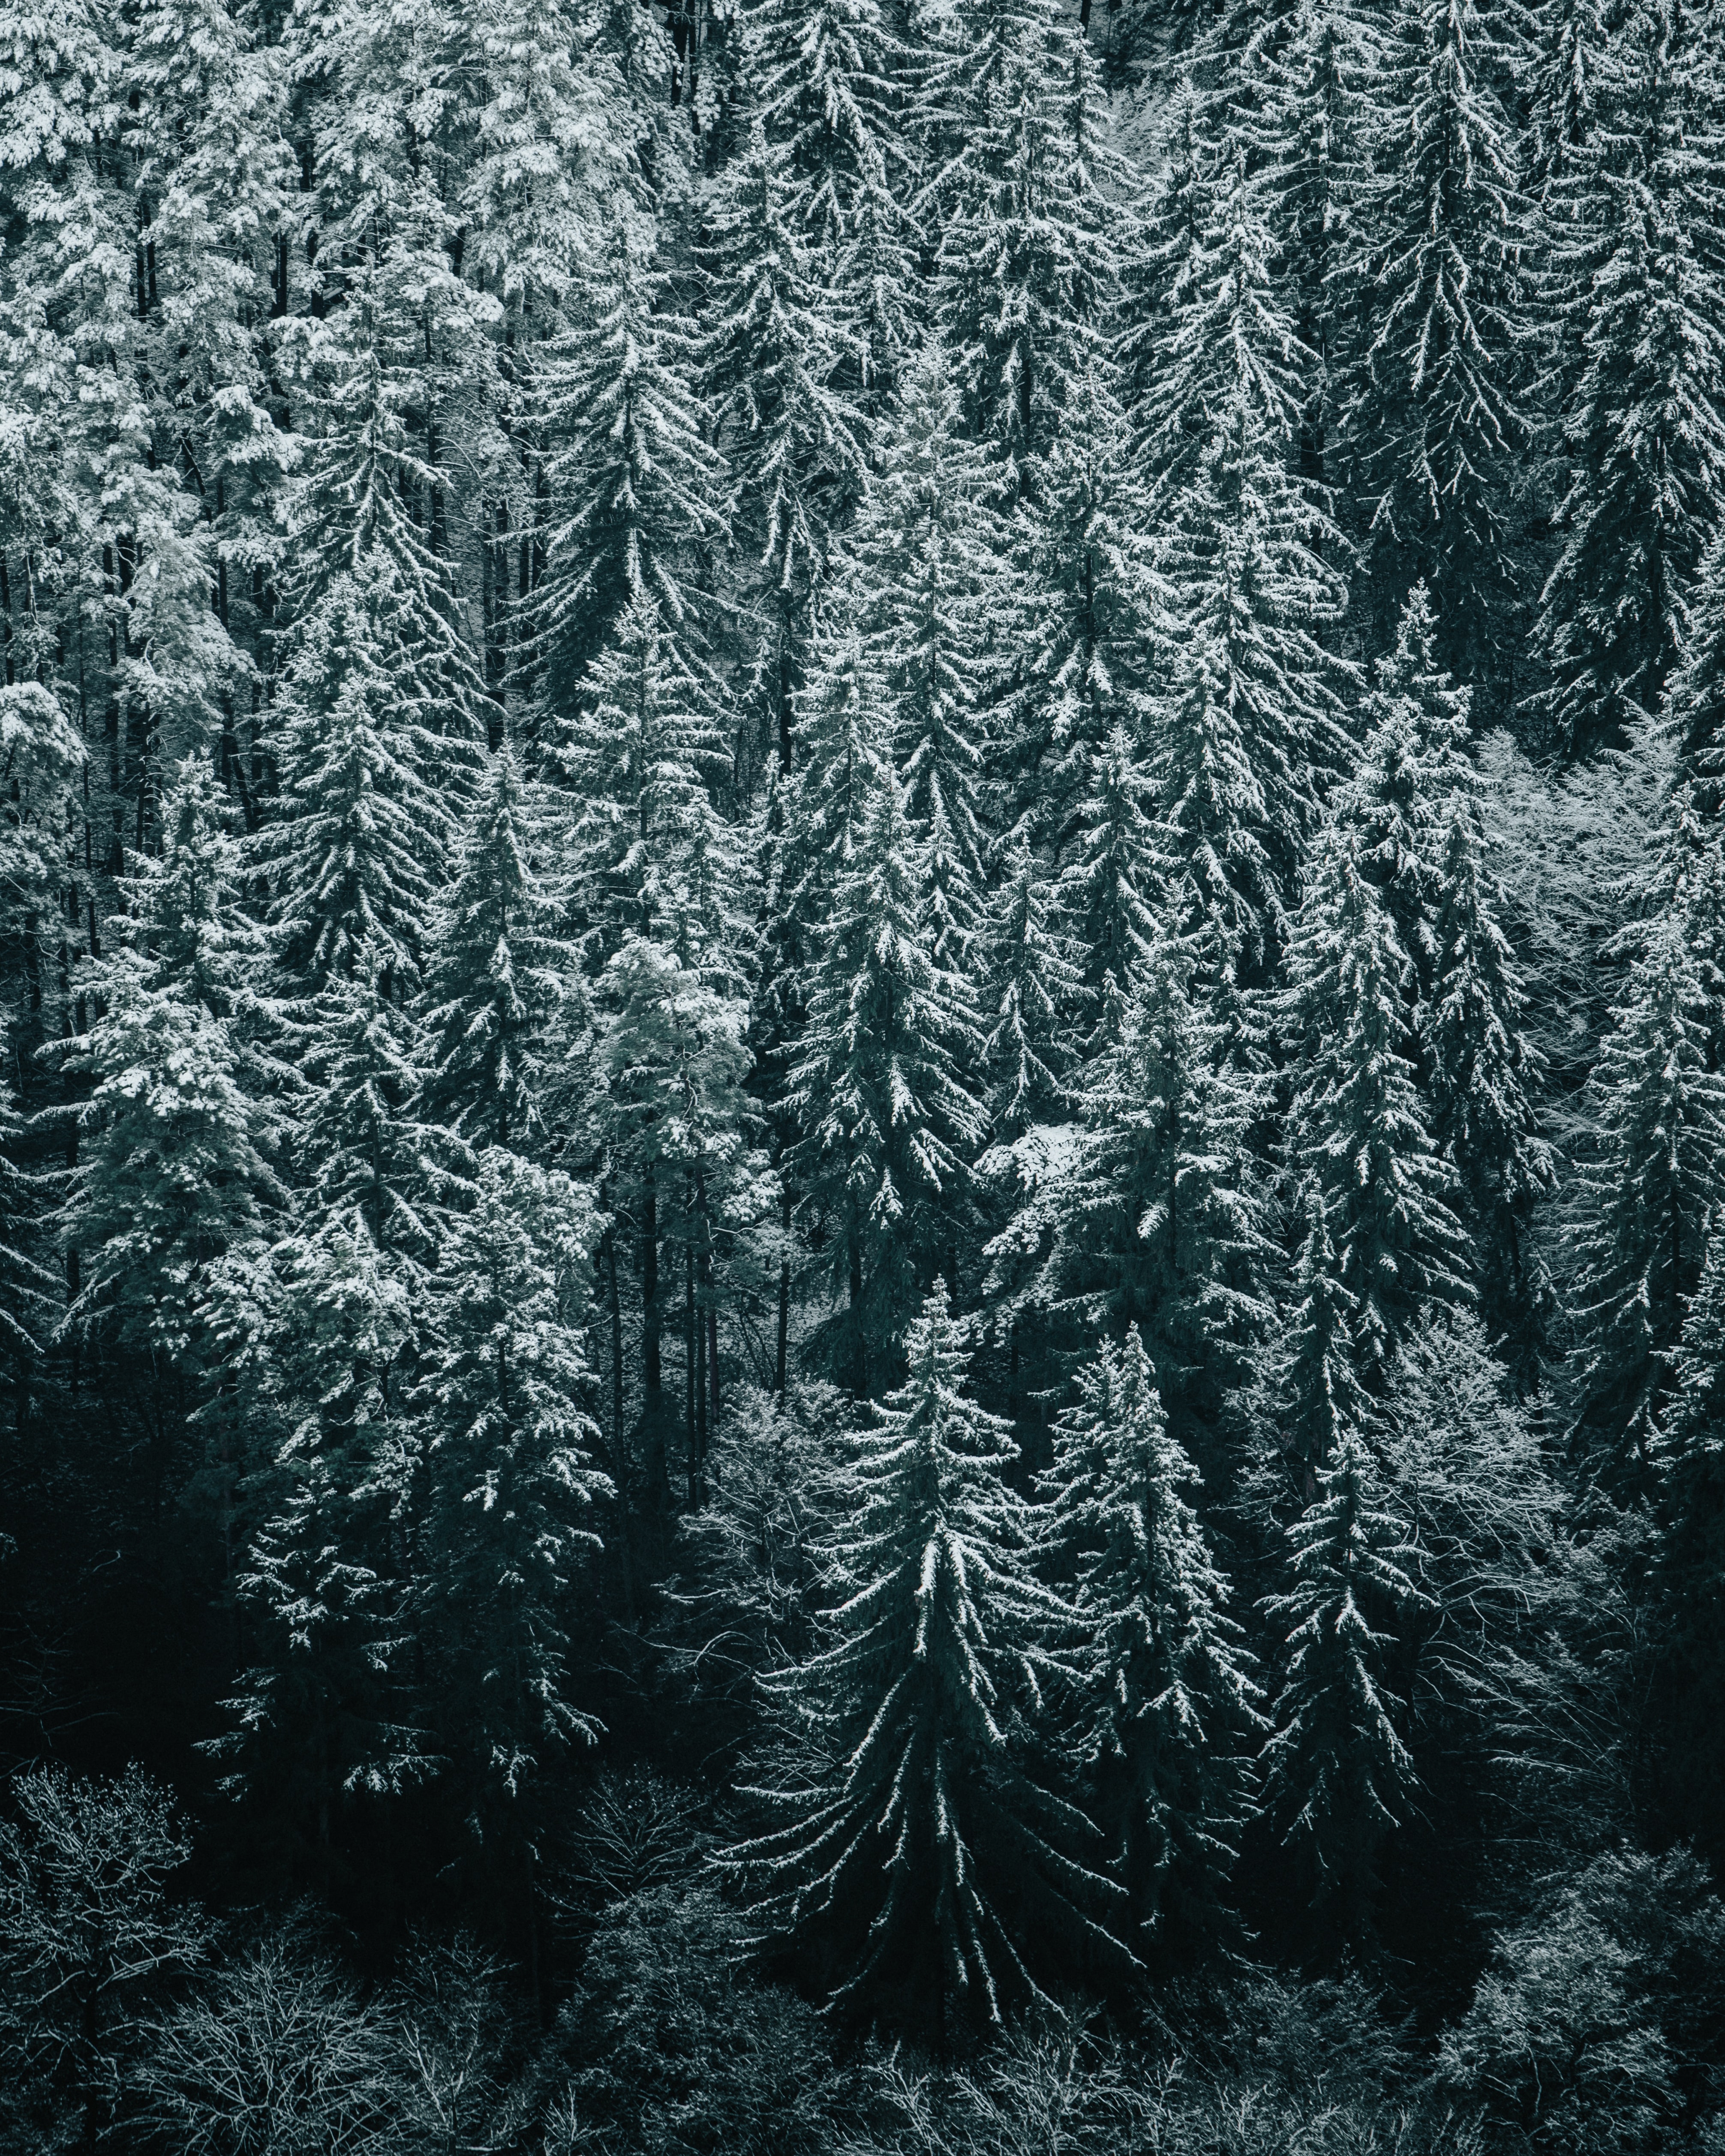 89751 descargar imagen invierno, naturaleza, árboles, nieve, bosque, comió, ato: fondos de pantalla y protectores de pantalla gratis